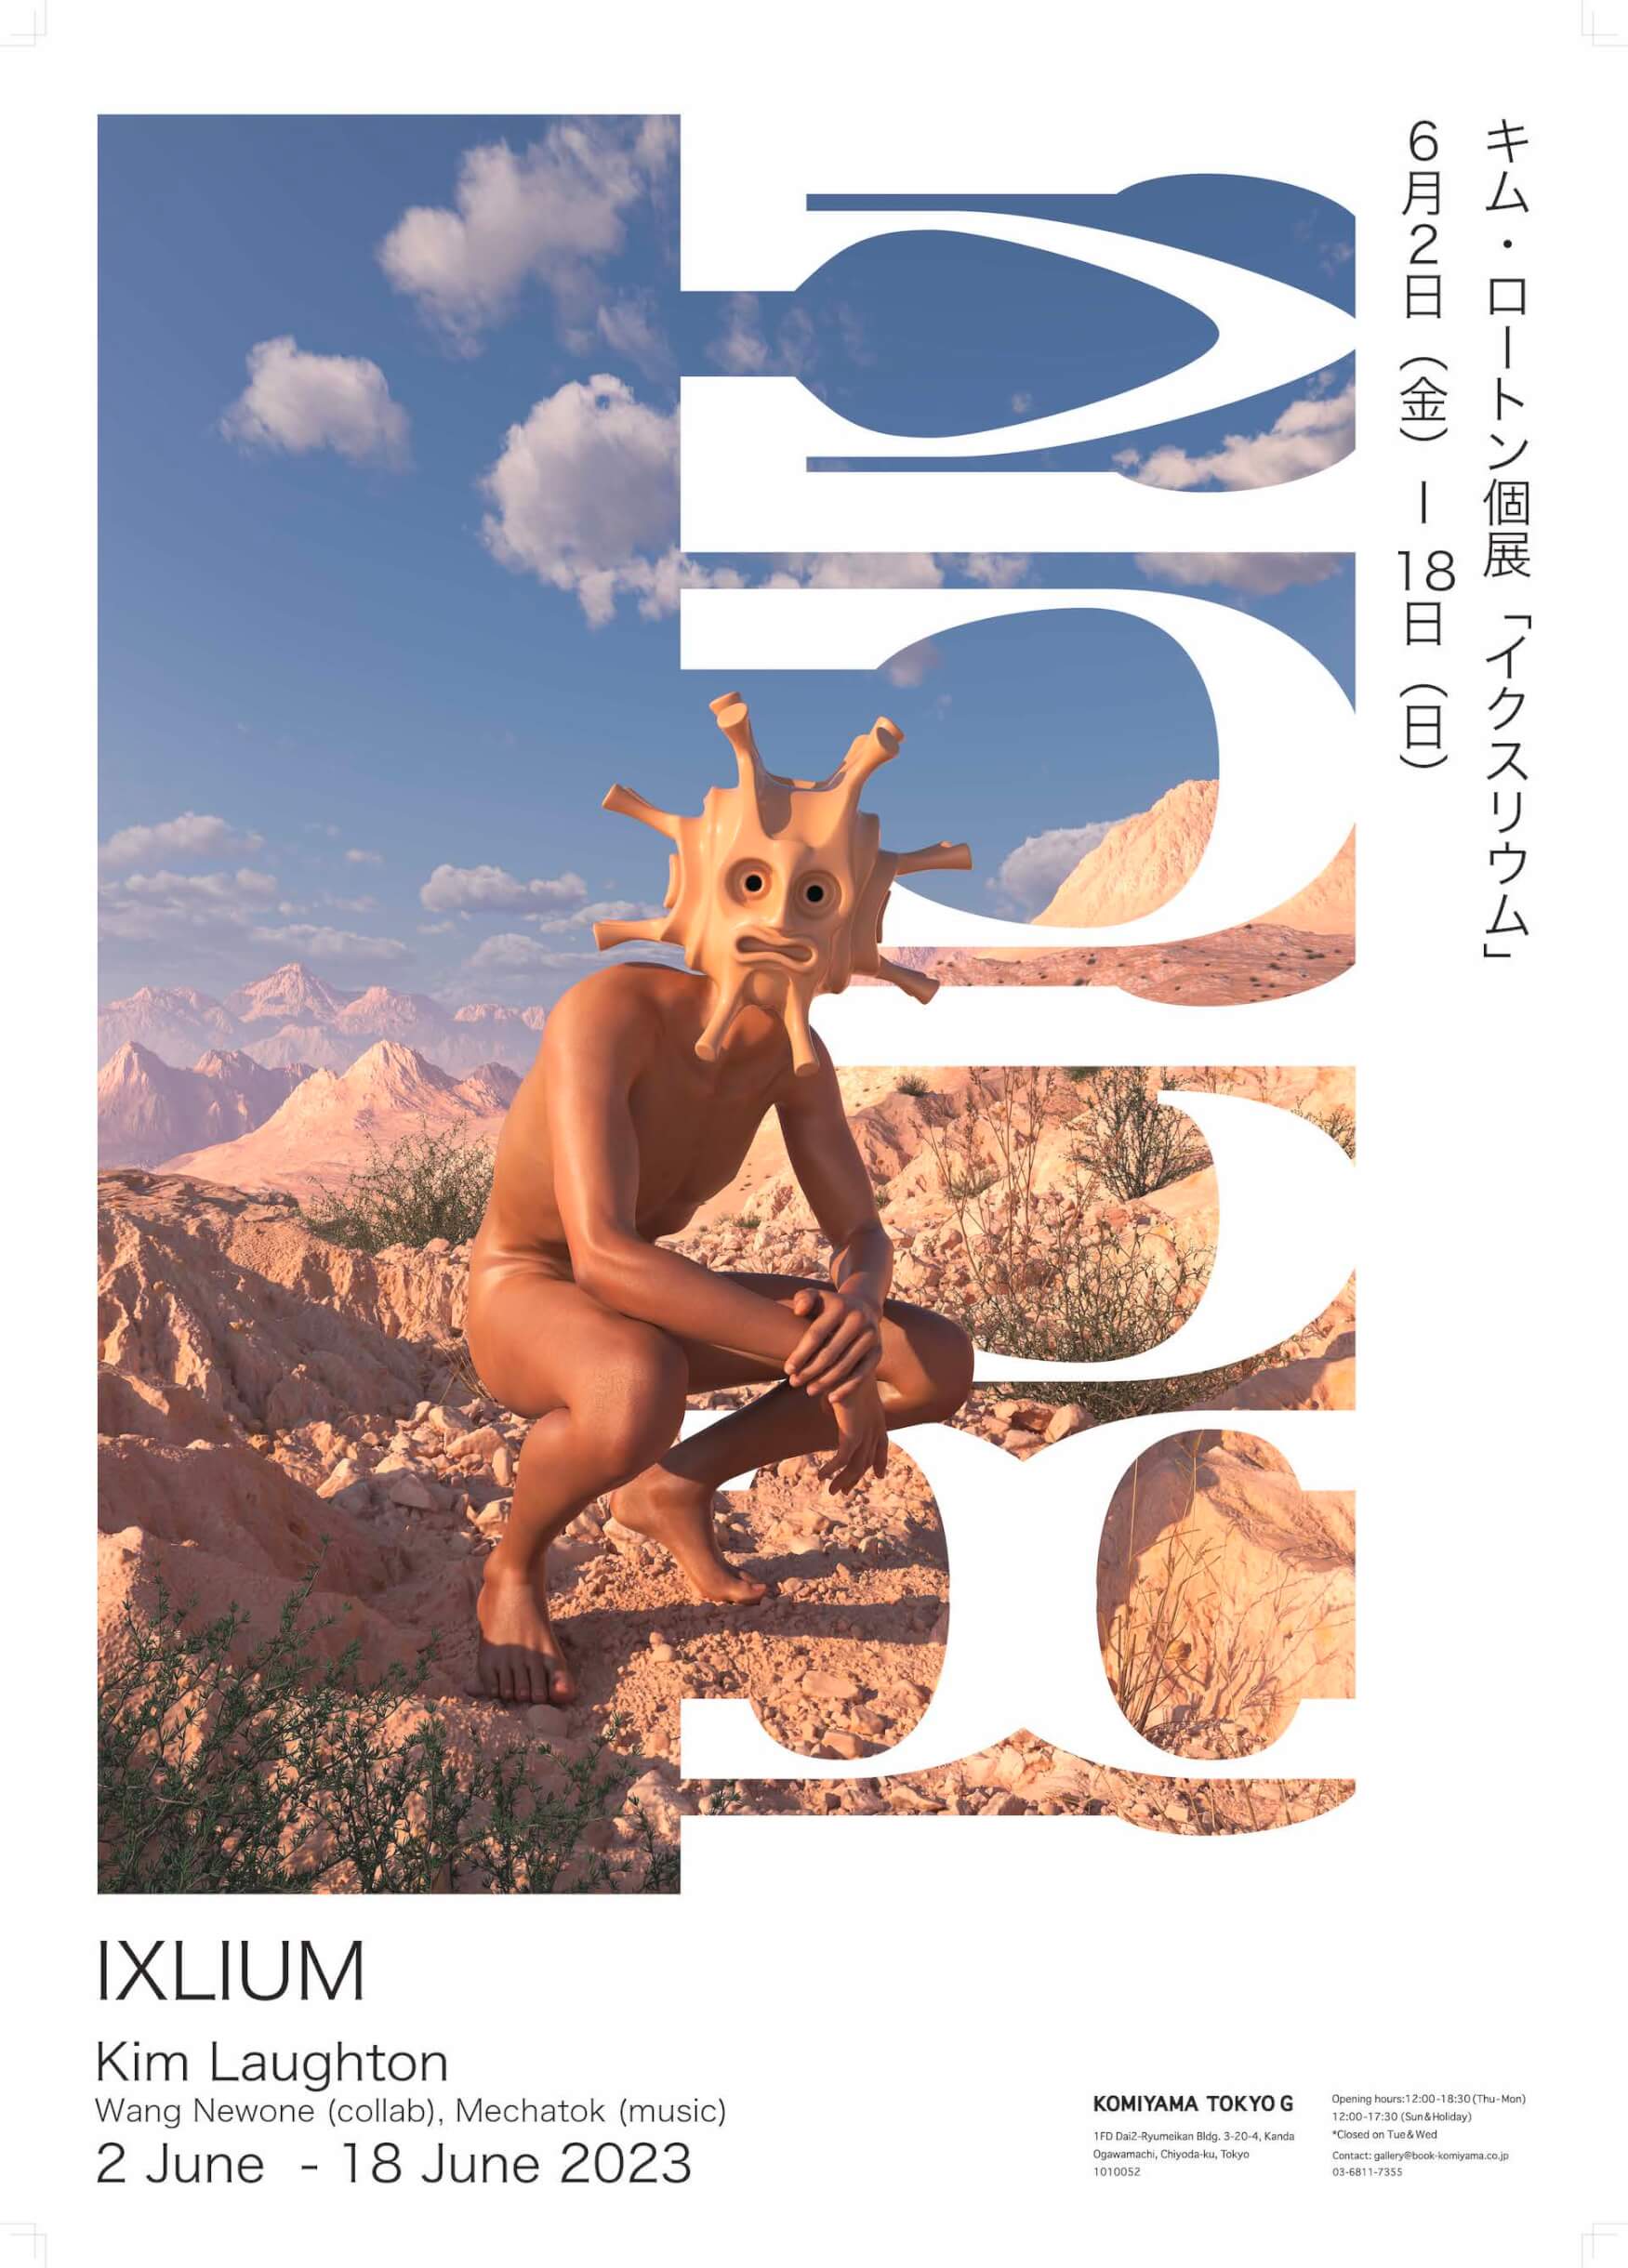 Kim Laughtonの個展＜イクスリウム＞がKOMIYAMA TOKYO Gで開催｜ギャラリーを仮想の孤島に接続、終わることのないRPGの世界をお届け art-culture230530-kim-laughton-Ixlium-2